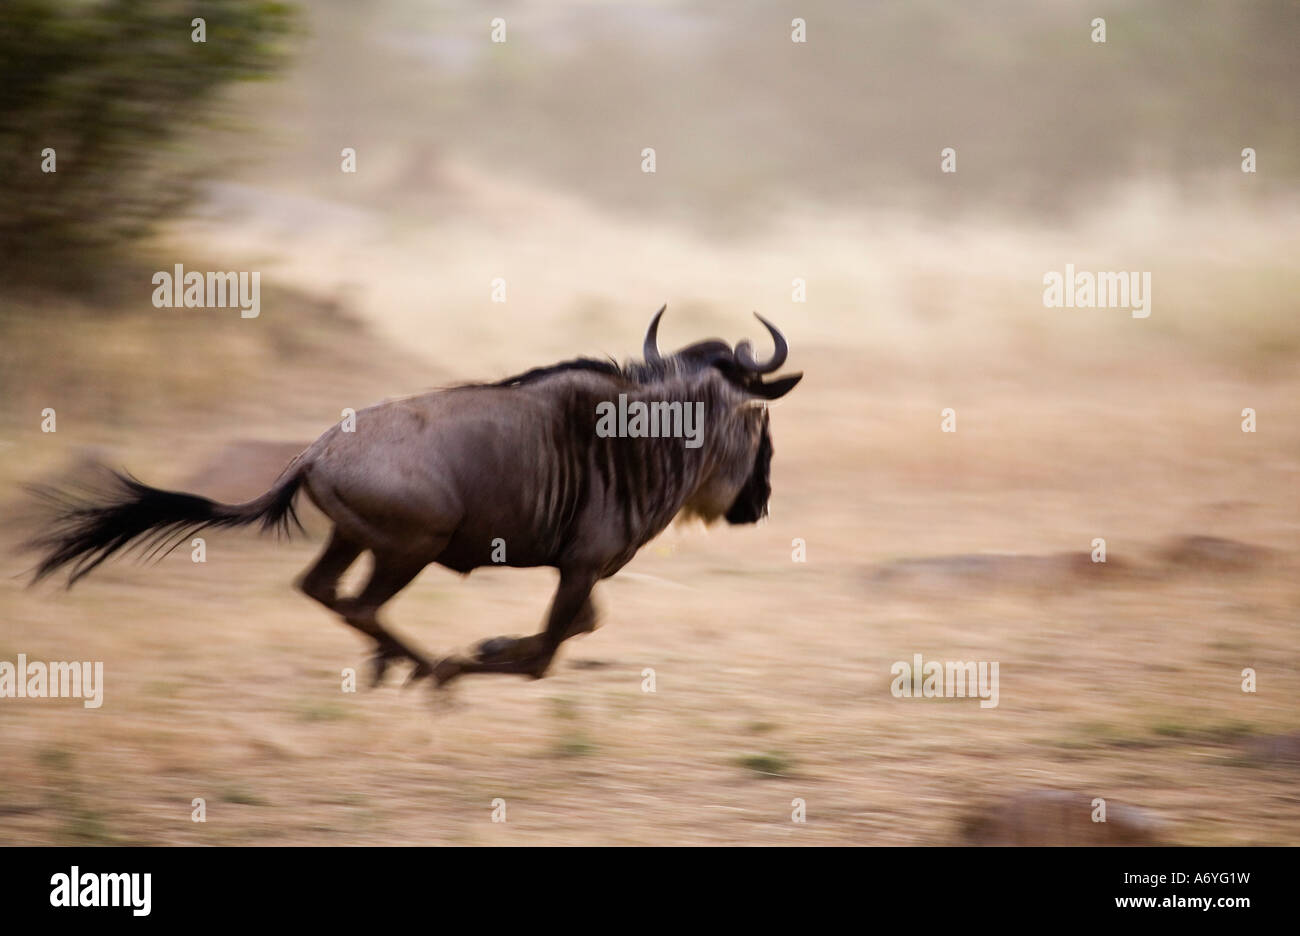 A wildebeest running Stock Photo